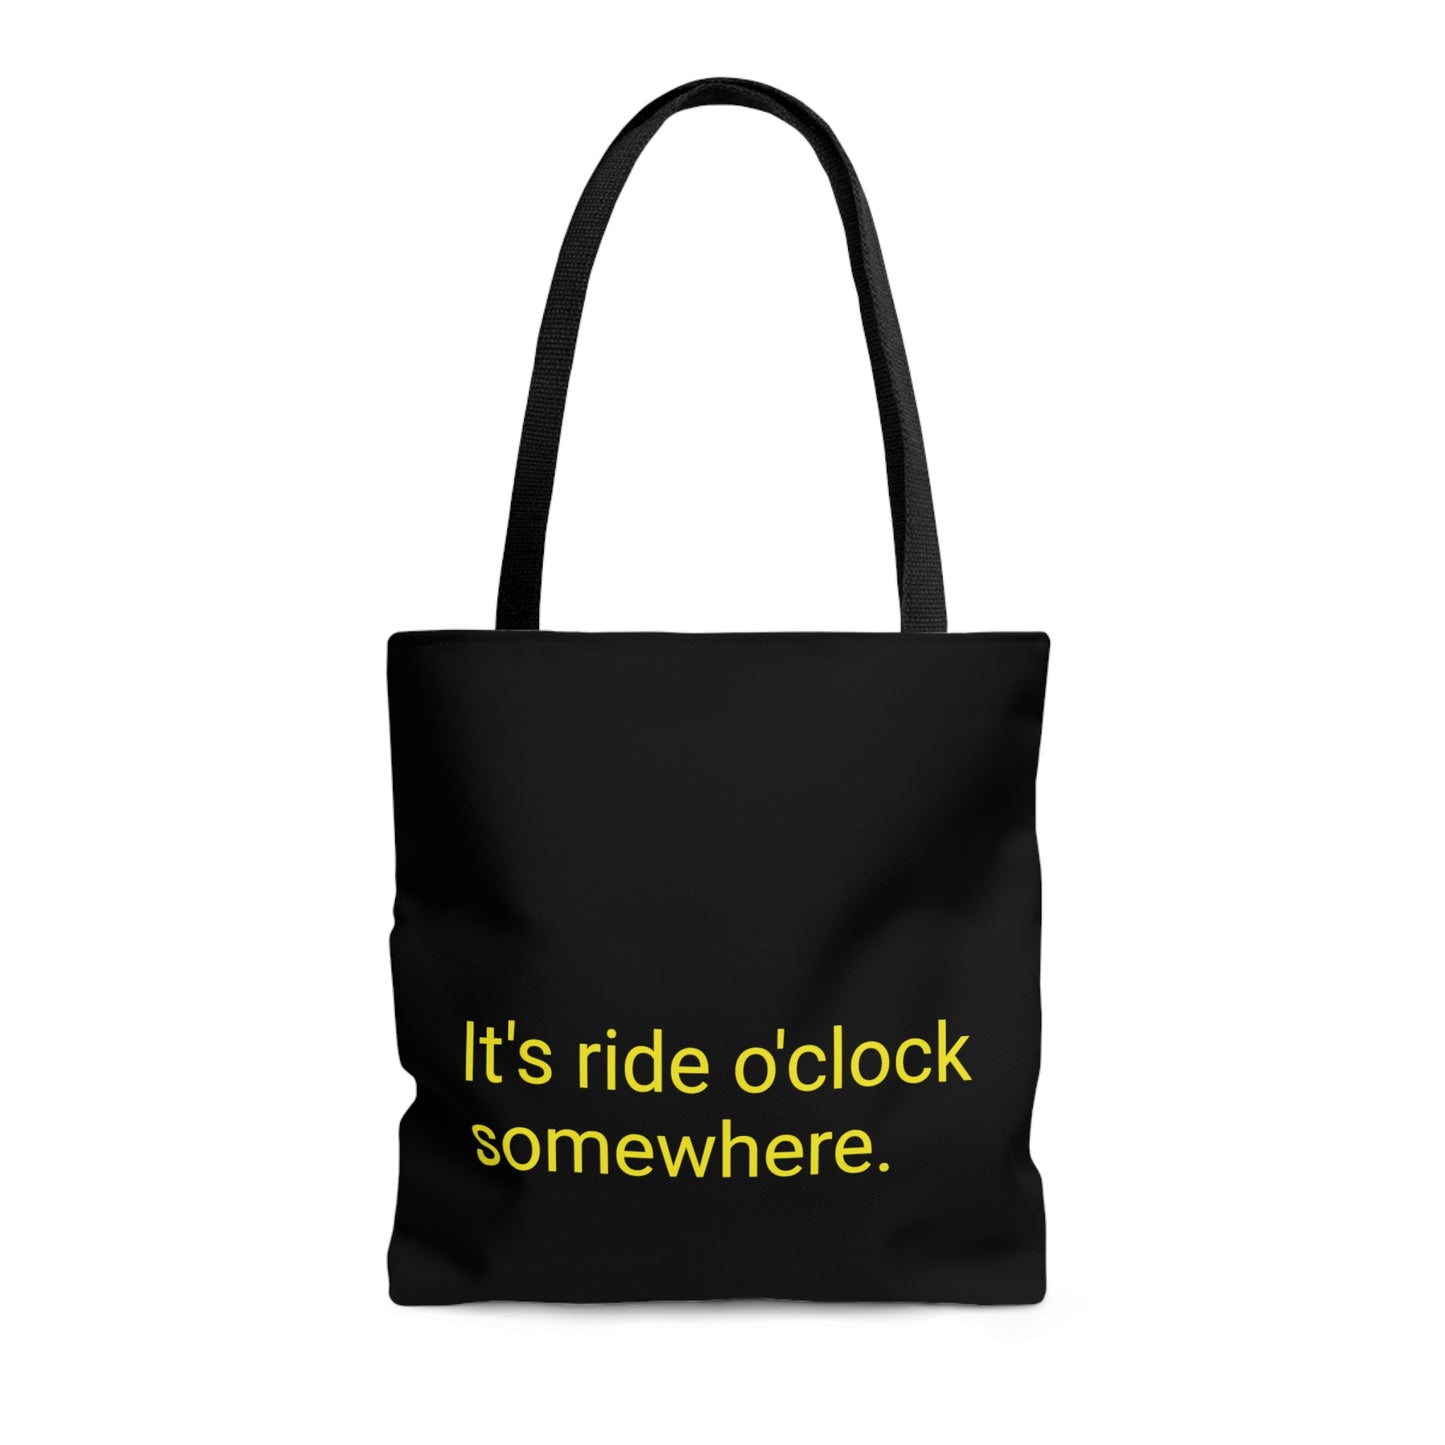 "It's ride o'clock somewhere" tote bag